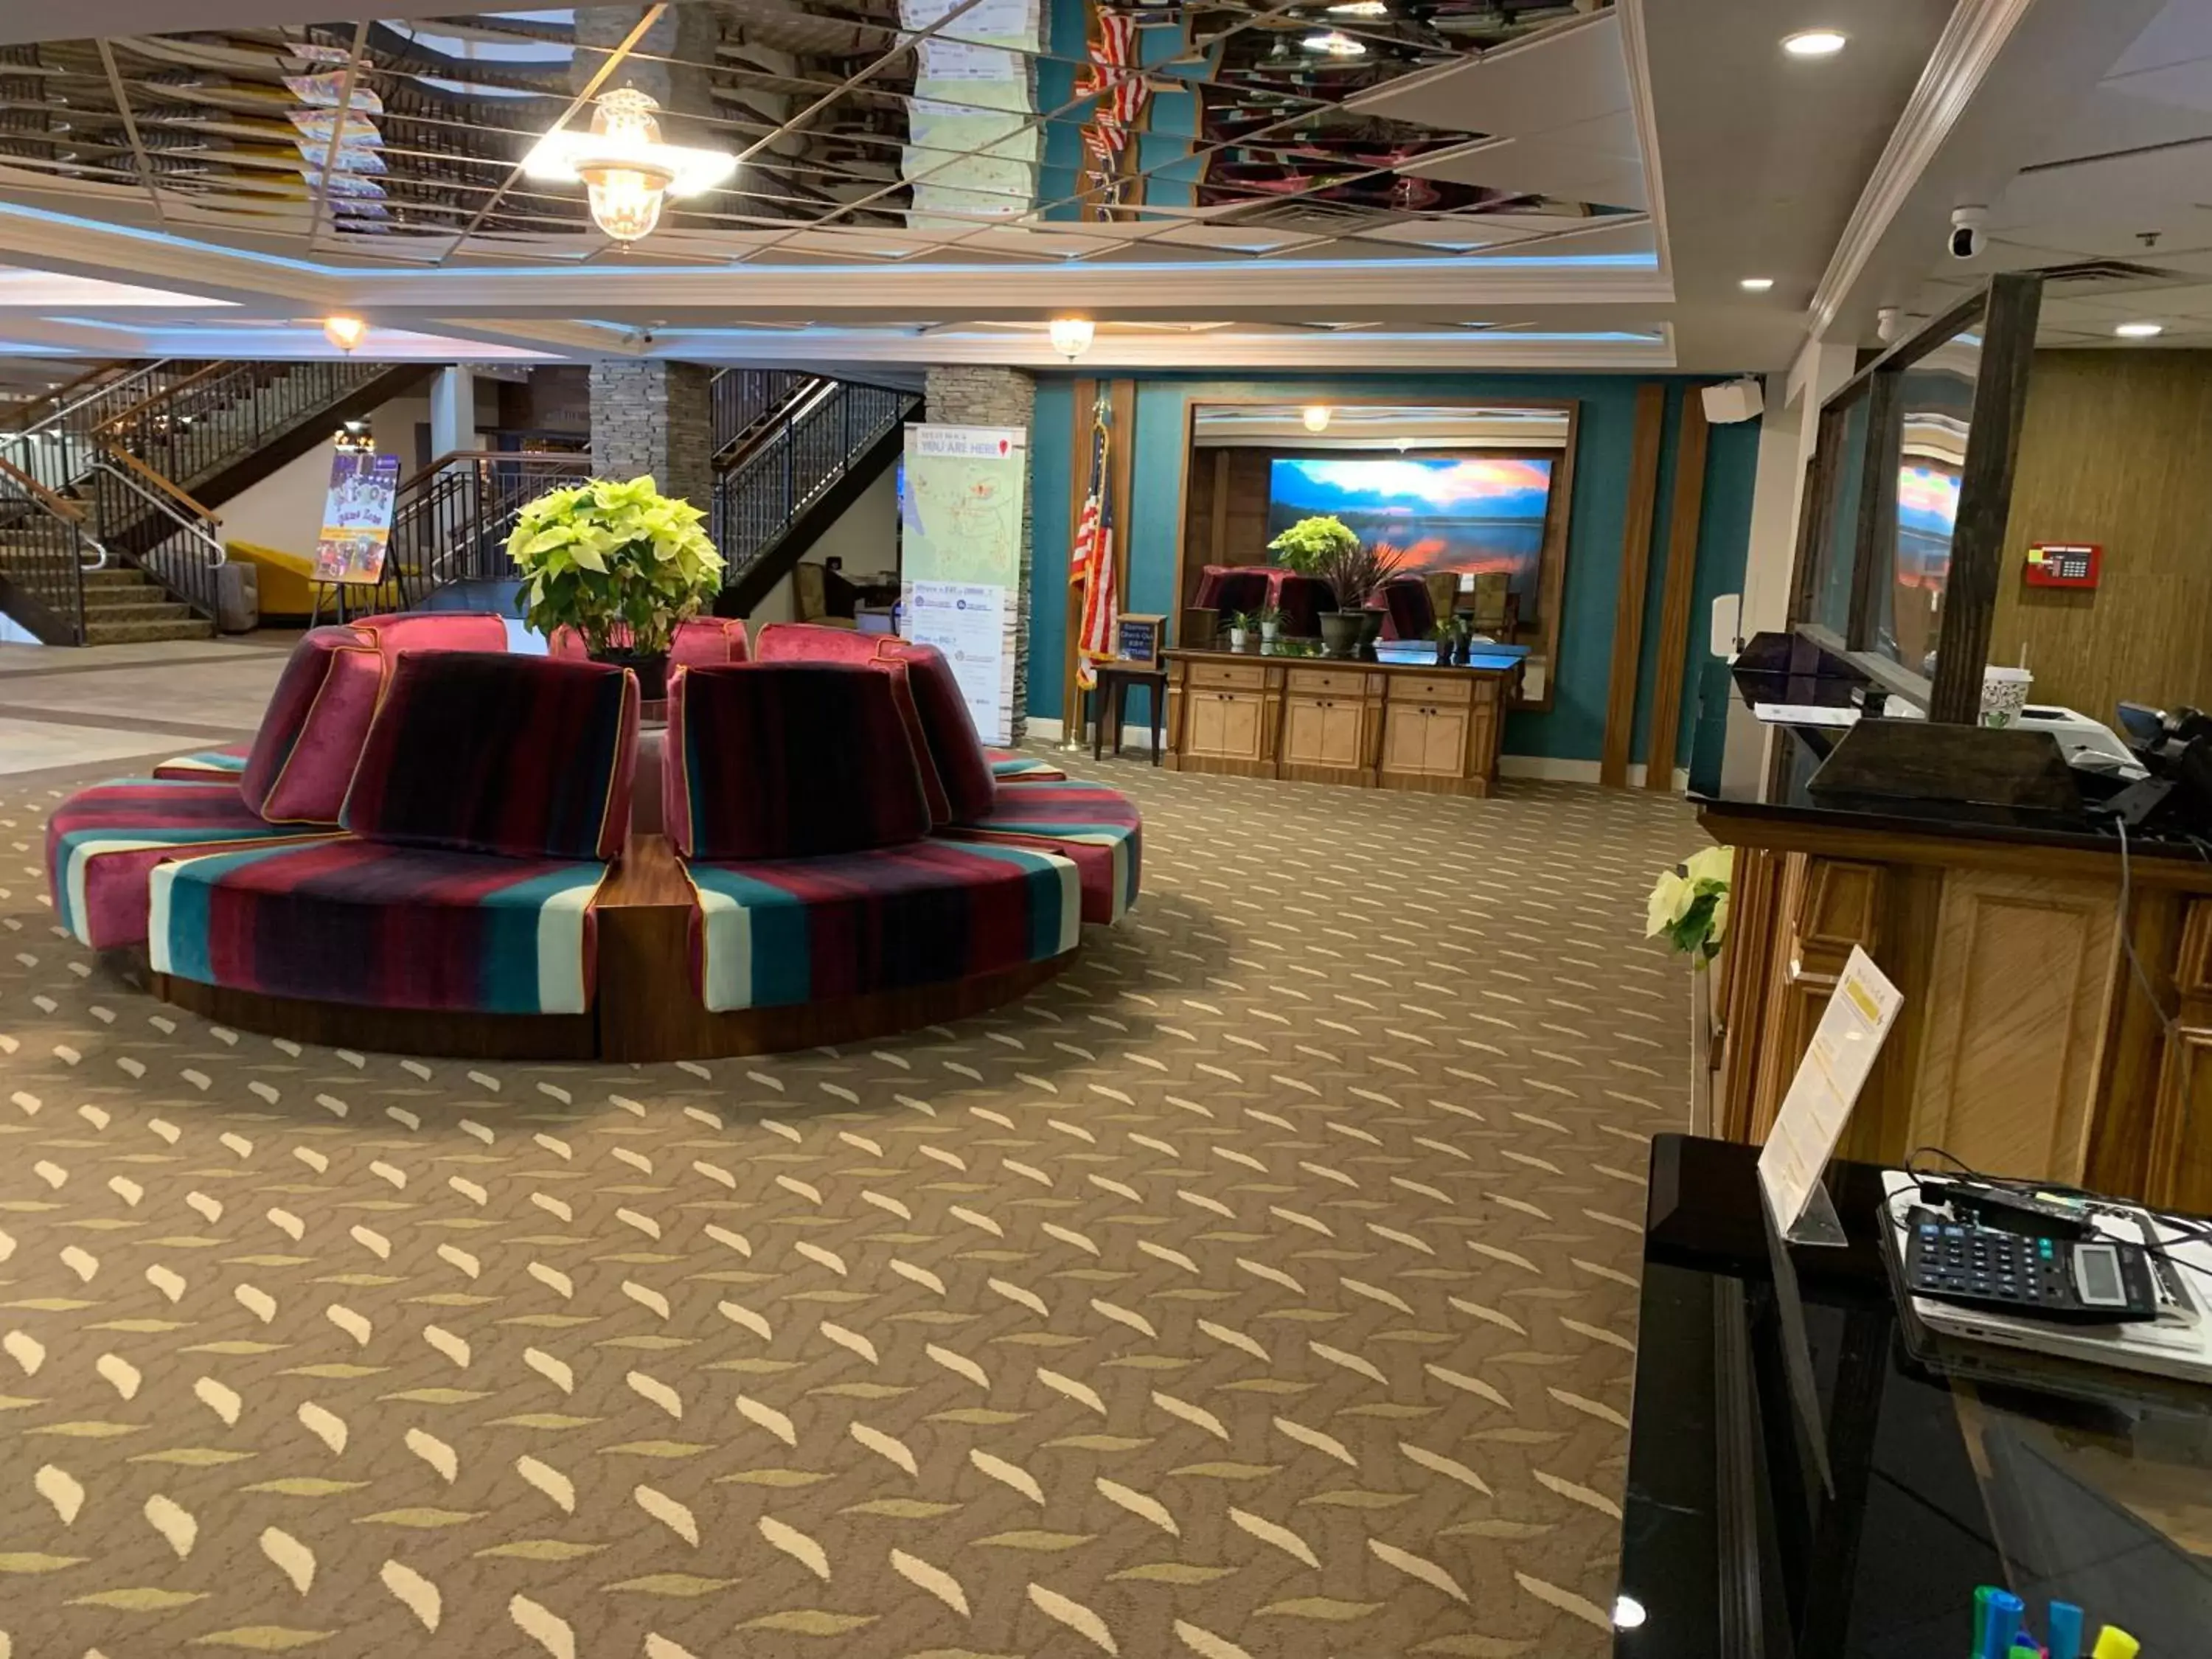 Lobby or reception in Split Rock Resort